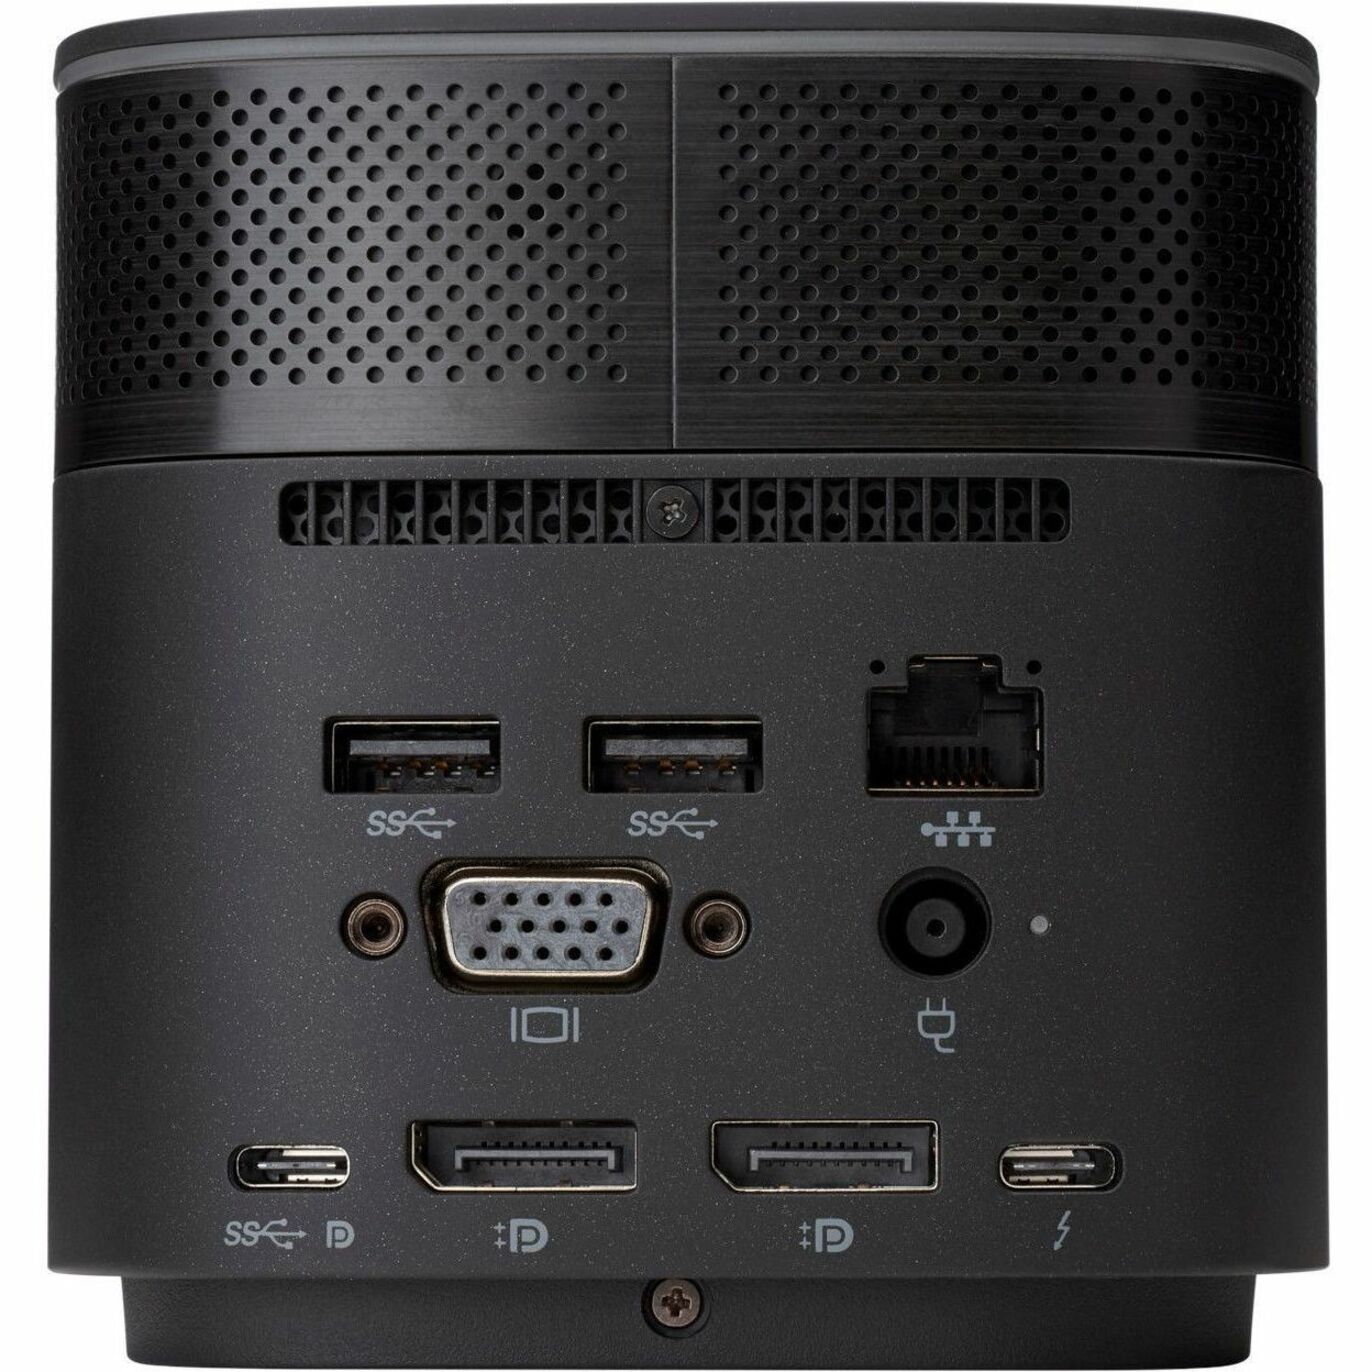 HPI SOURCING - NEW 3YE87UT Thunderbolt Dock 120W G2 w/Audio, USB-C, VGA, DisplayPort, Ethernet, USB Ports